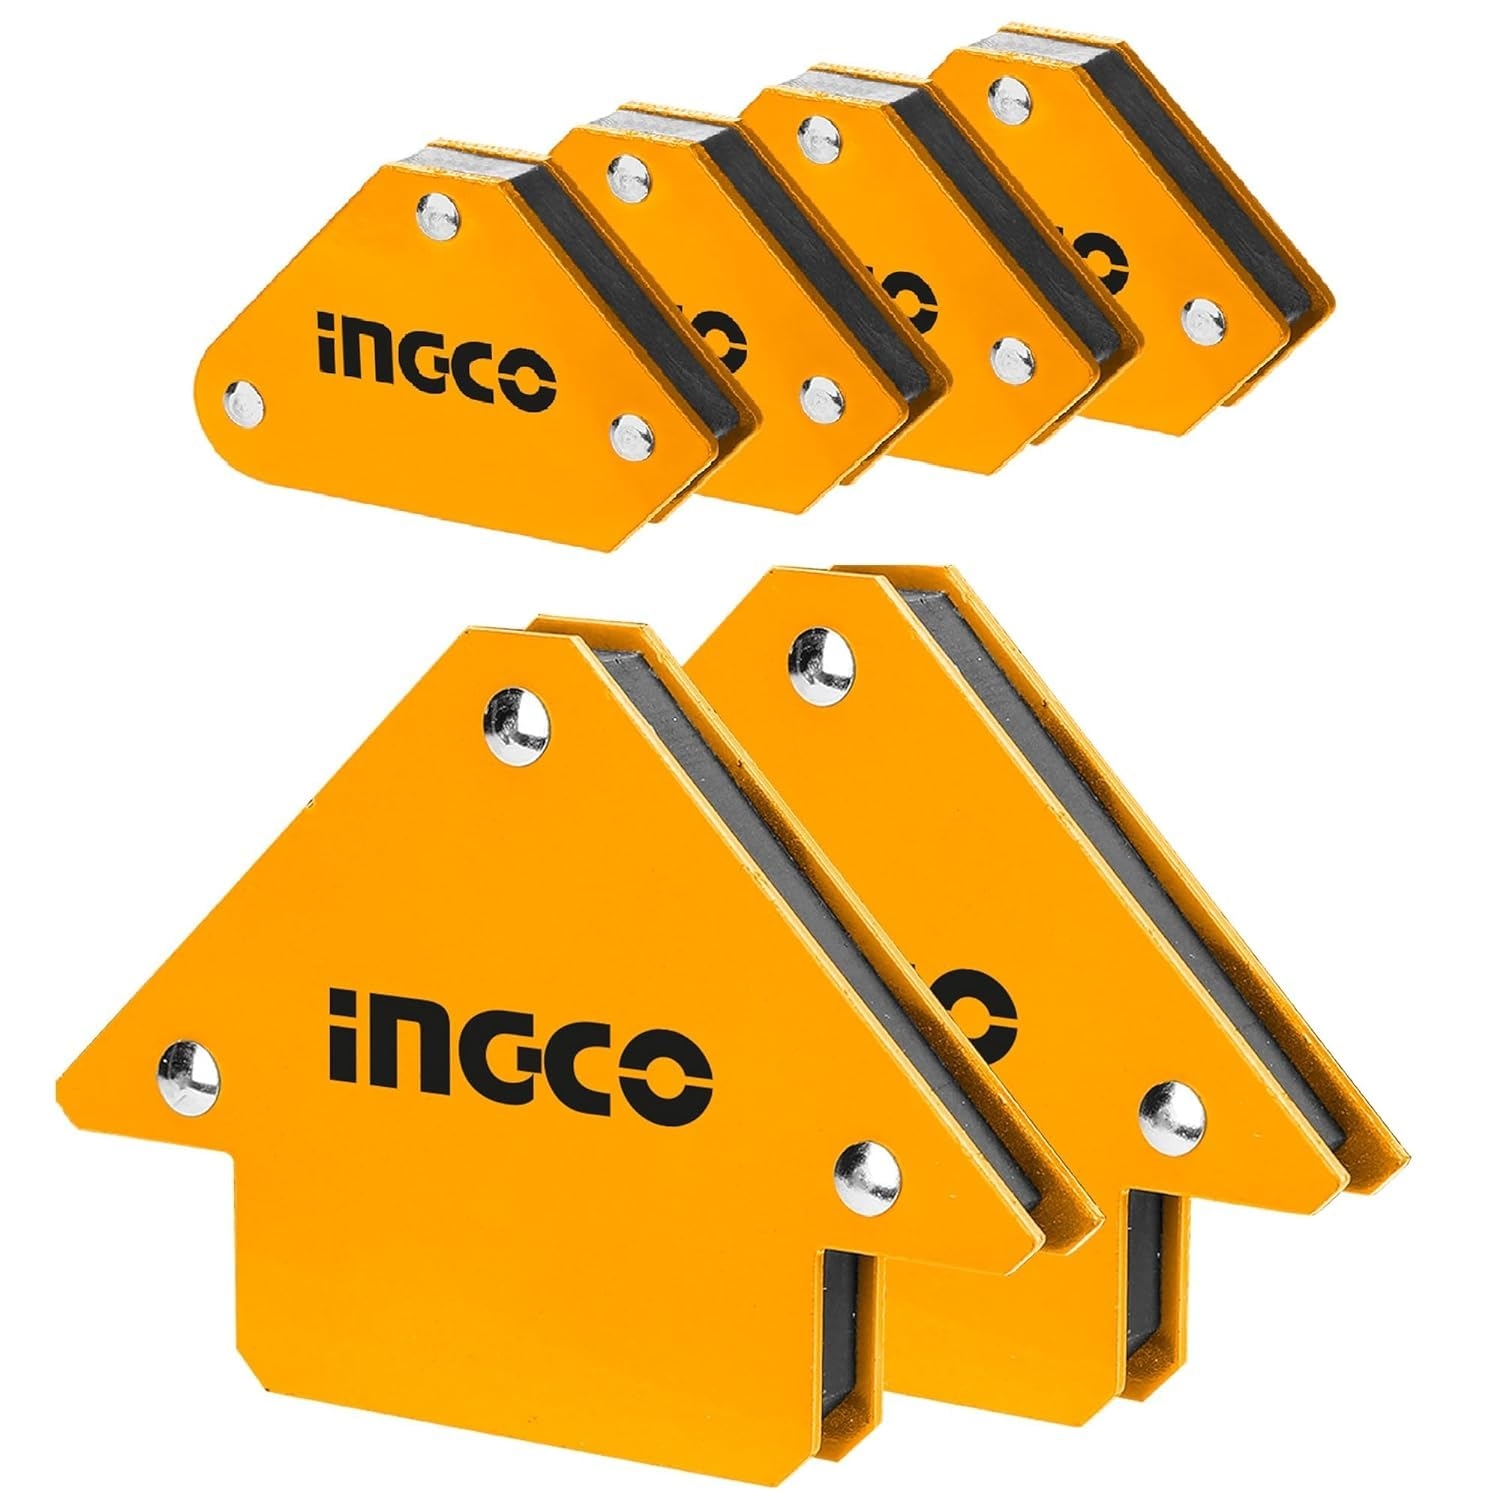 INGCO Welding Machine Welding Holder, Magnet Set, Welding Accessories, 6 pcs pack